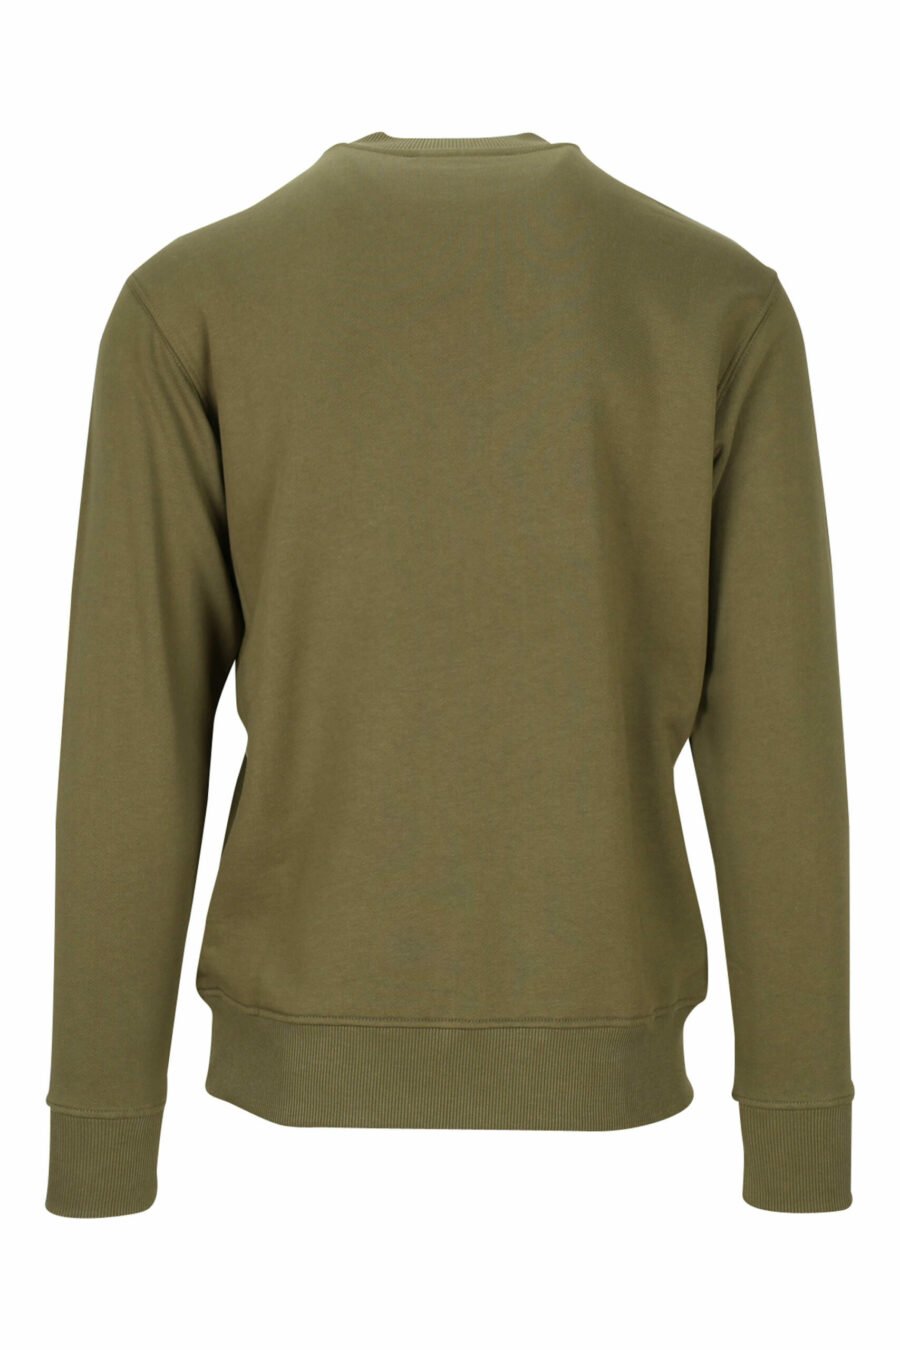 Military green sweatshirt with orange "piece number" maxilogo - 8052019469479 1 scaled